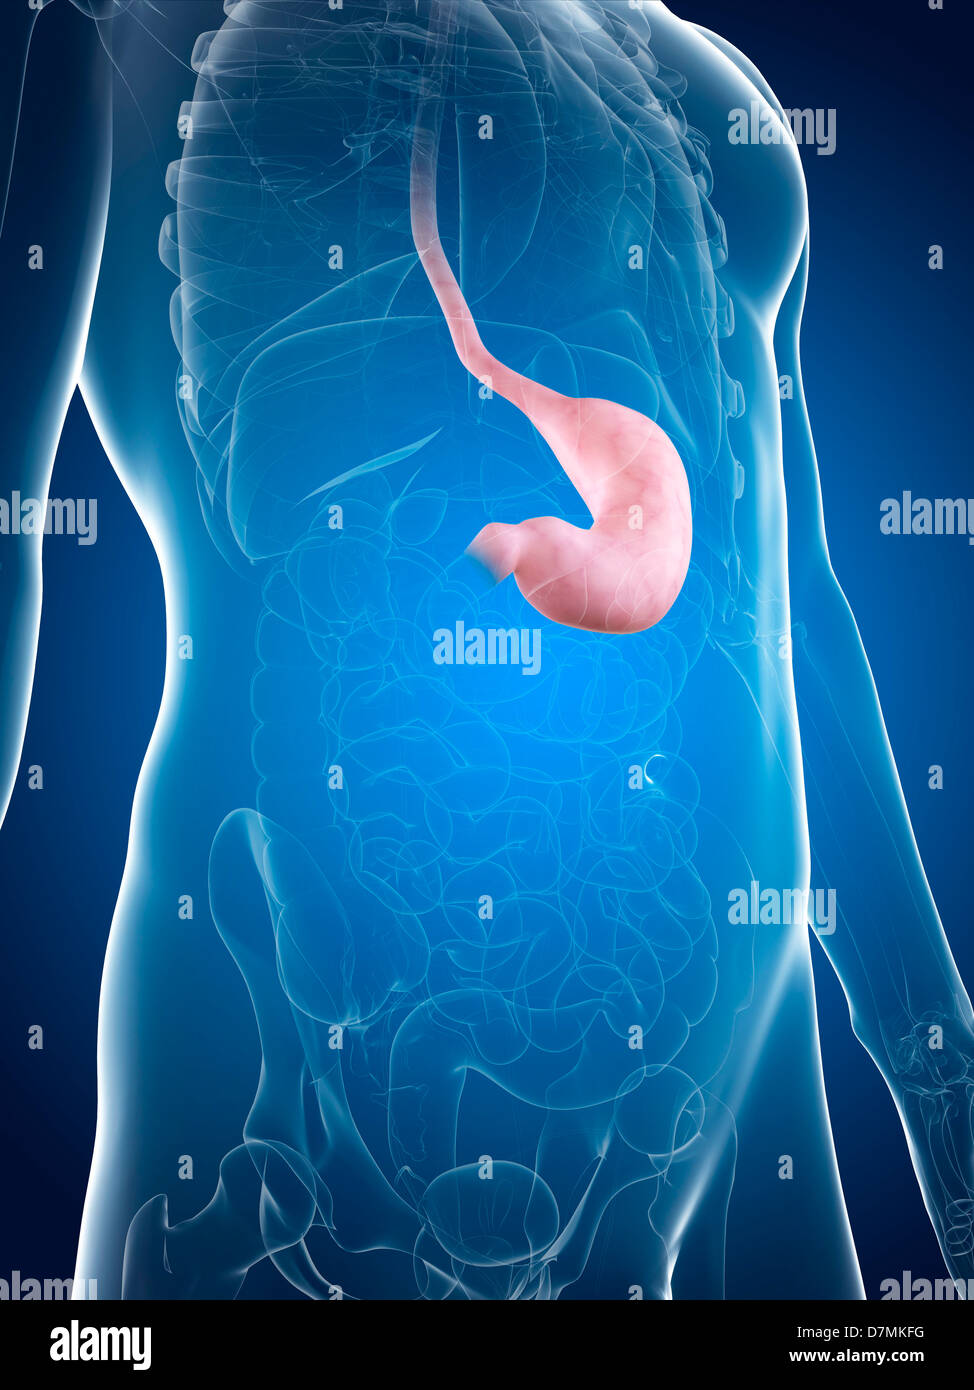 Healthy stomach, artwork Stock Photo - Alamy